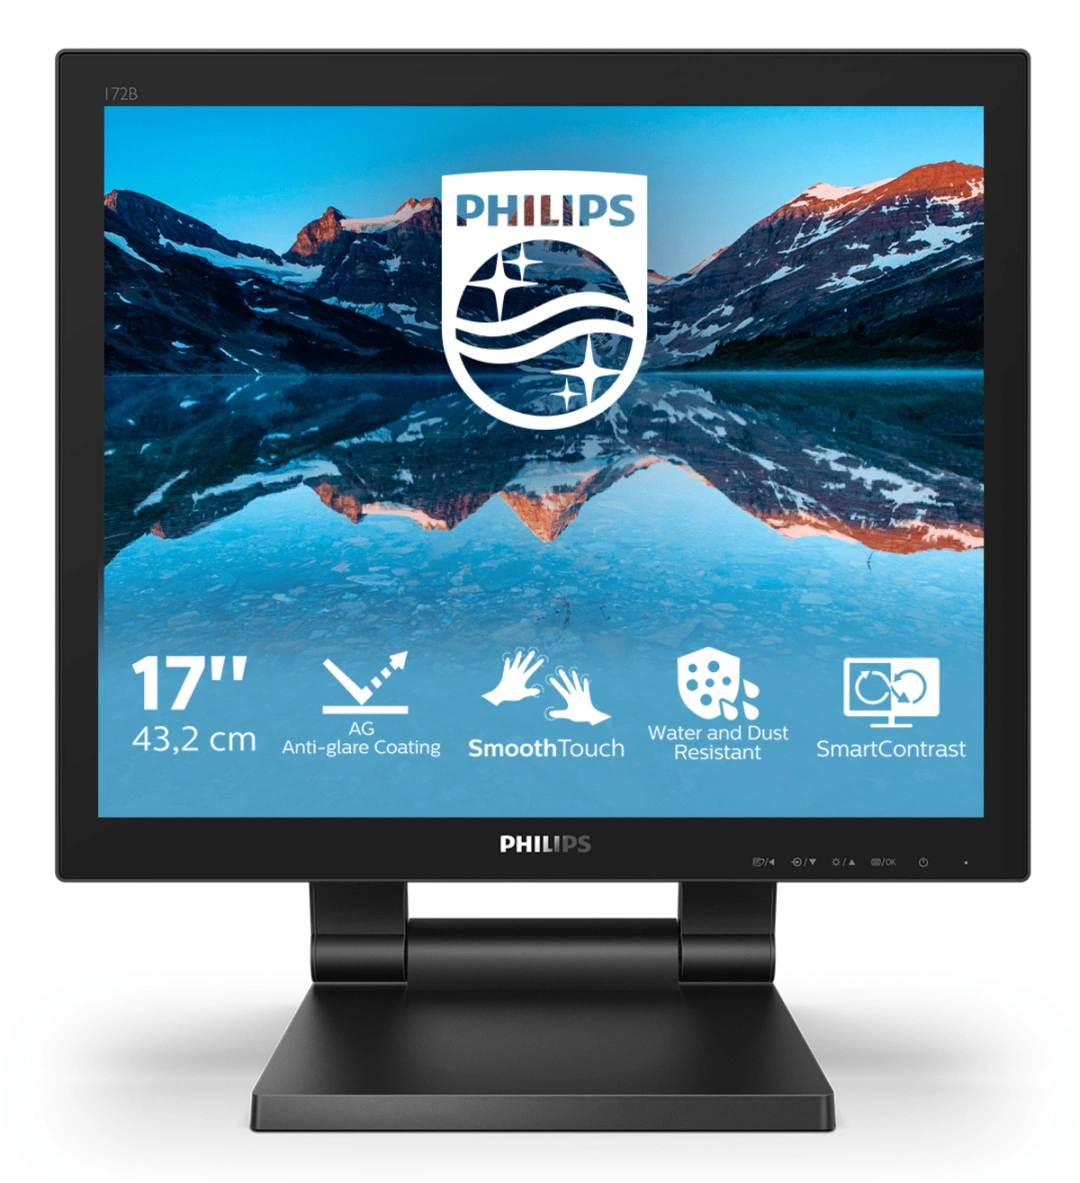 Philips 172B9TL - LED monitor 17